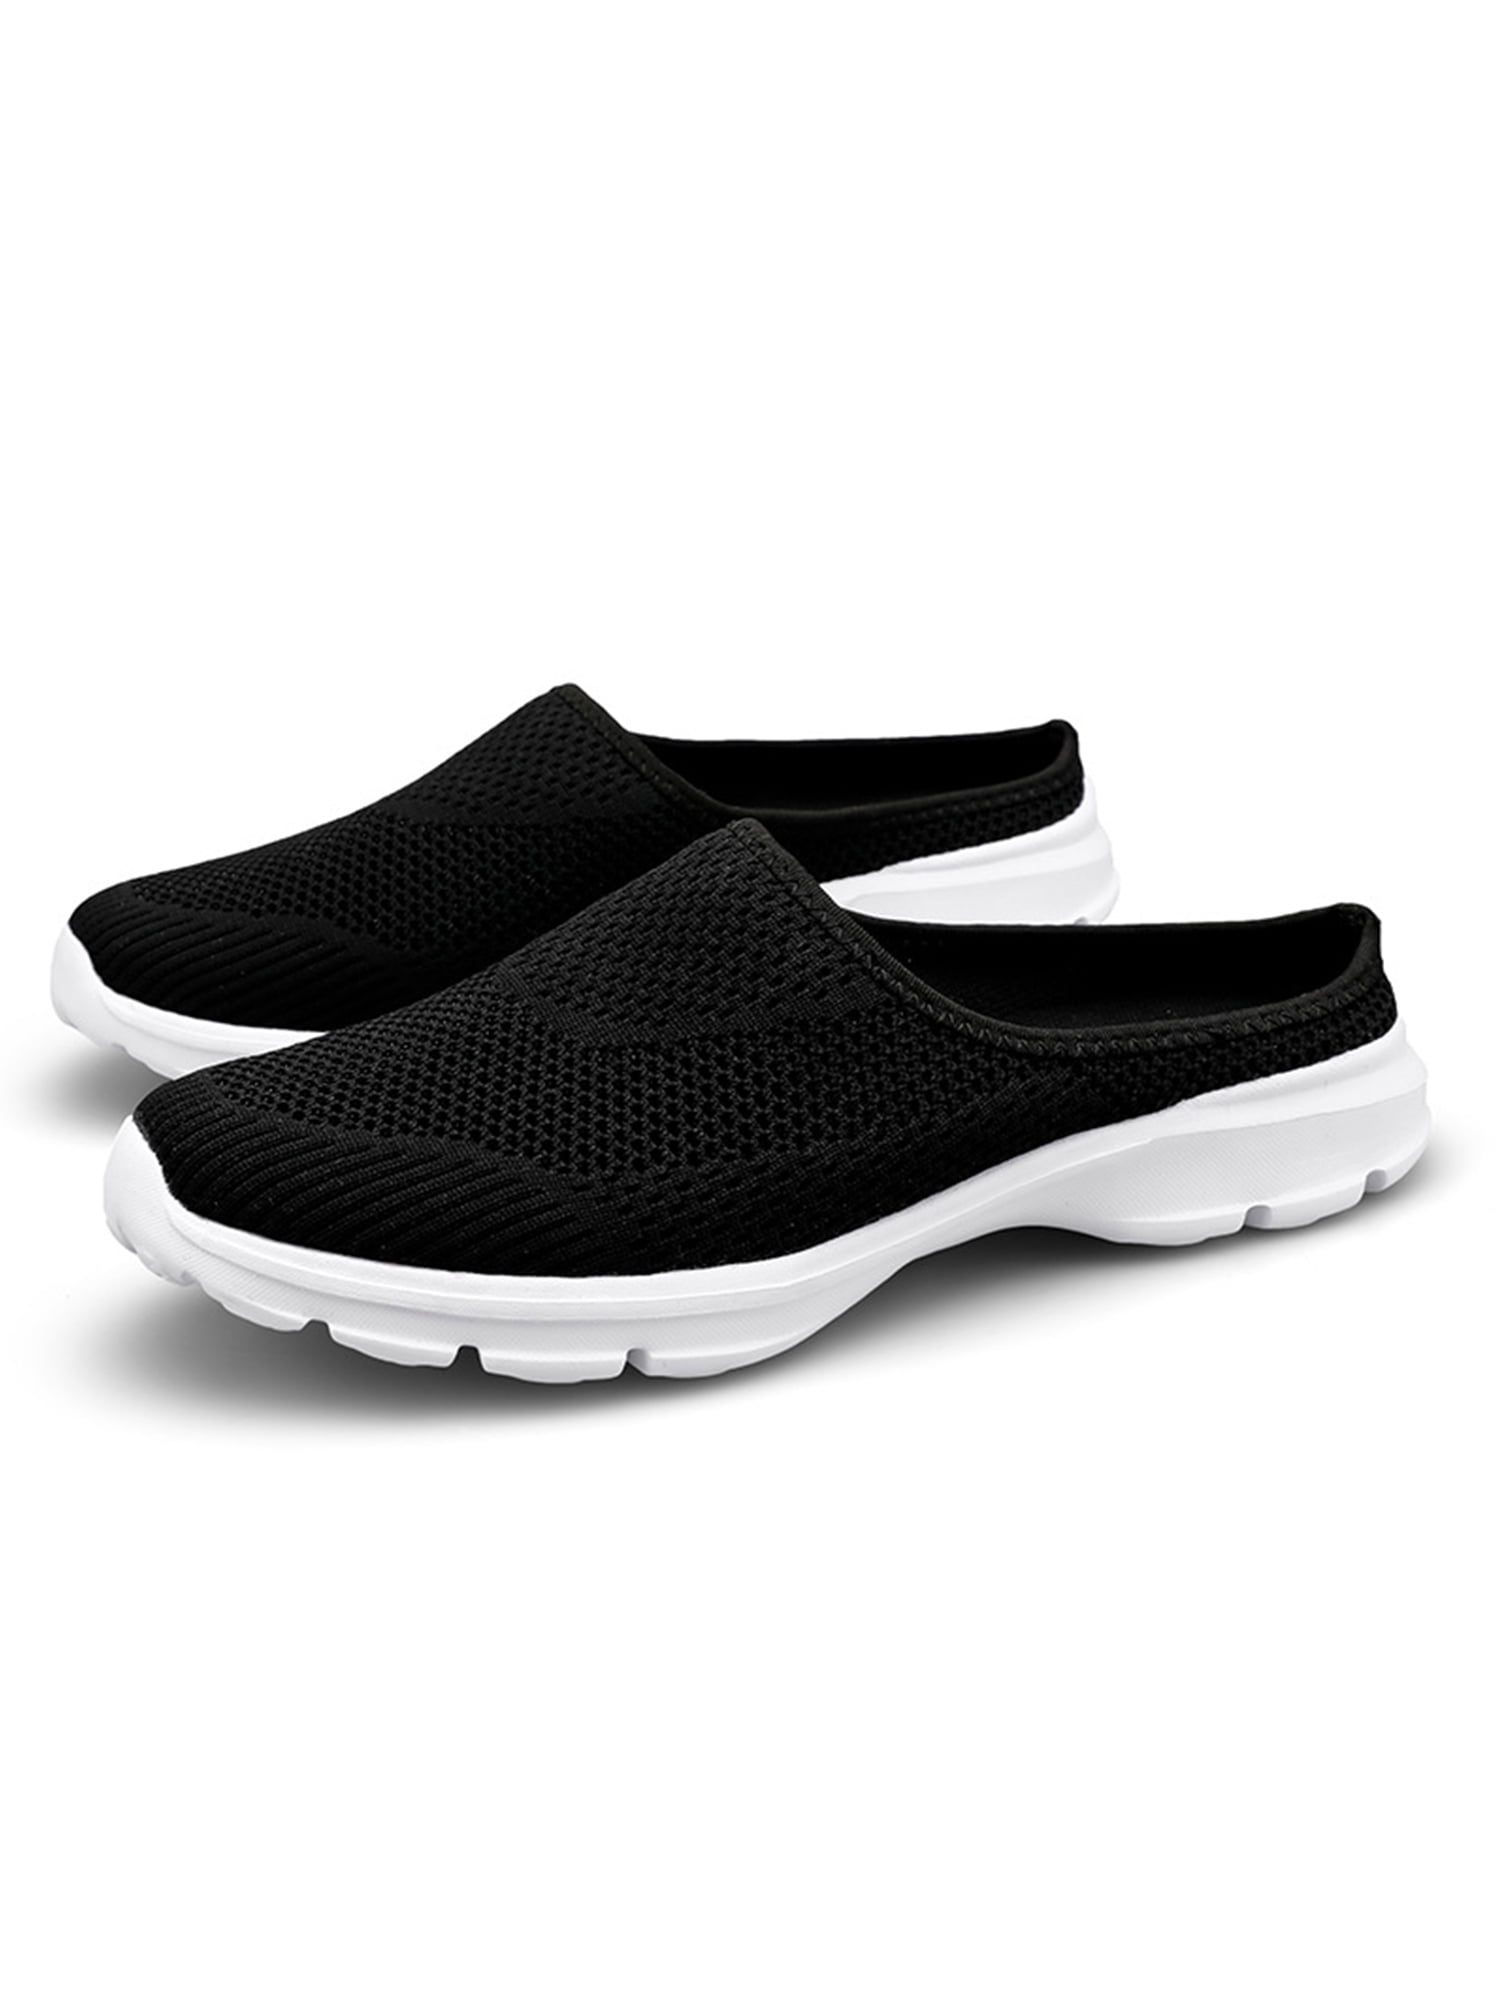 Unisex Shoes Womens Slip-On Mule Sneaker Mens Garden Clog Breathable House Slippers Walking Beach Shoes - Walmart.com